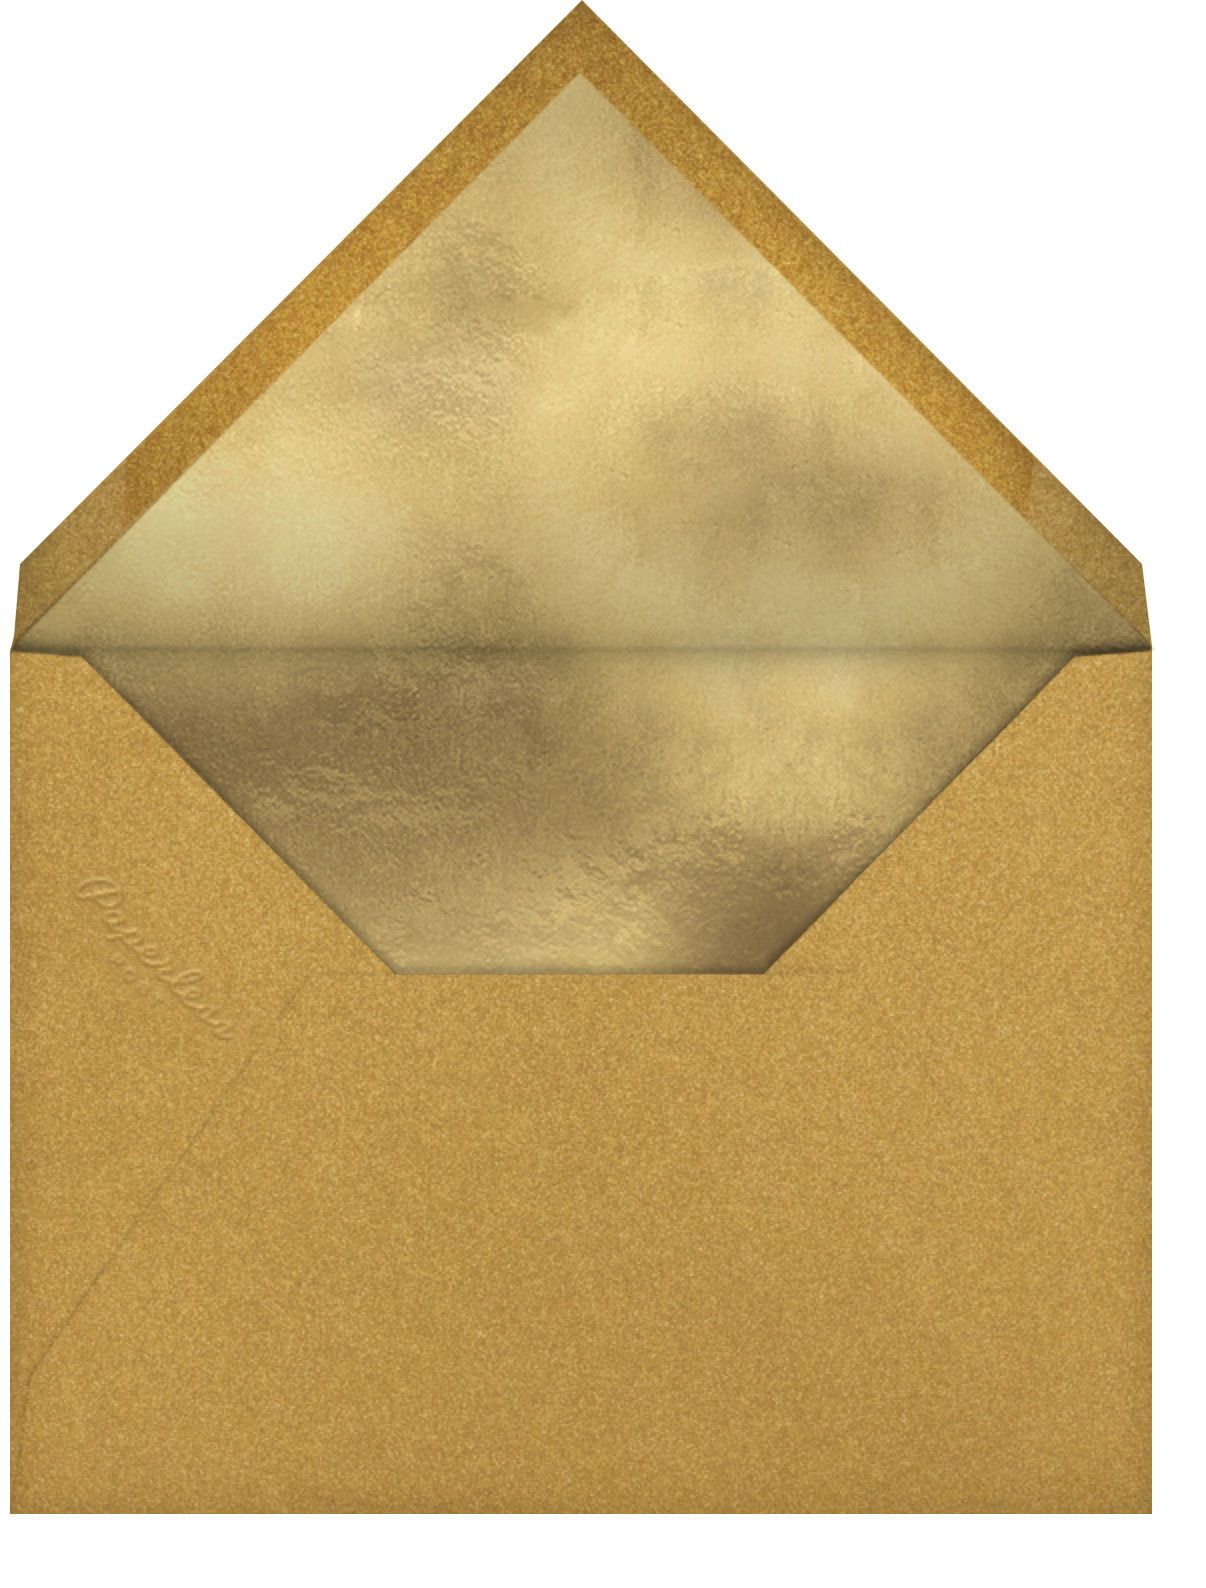 Vinayanka (Invitation) - Orange - Paperless Post - Envelope